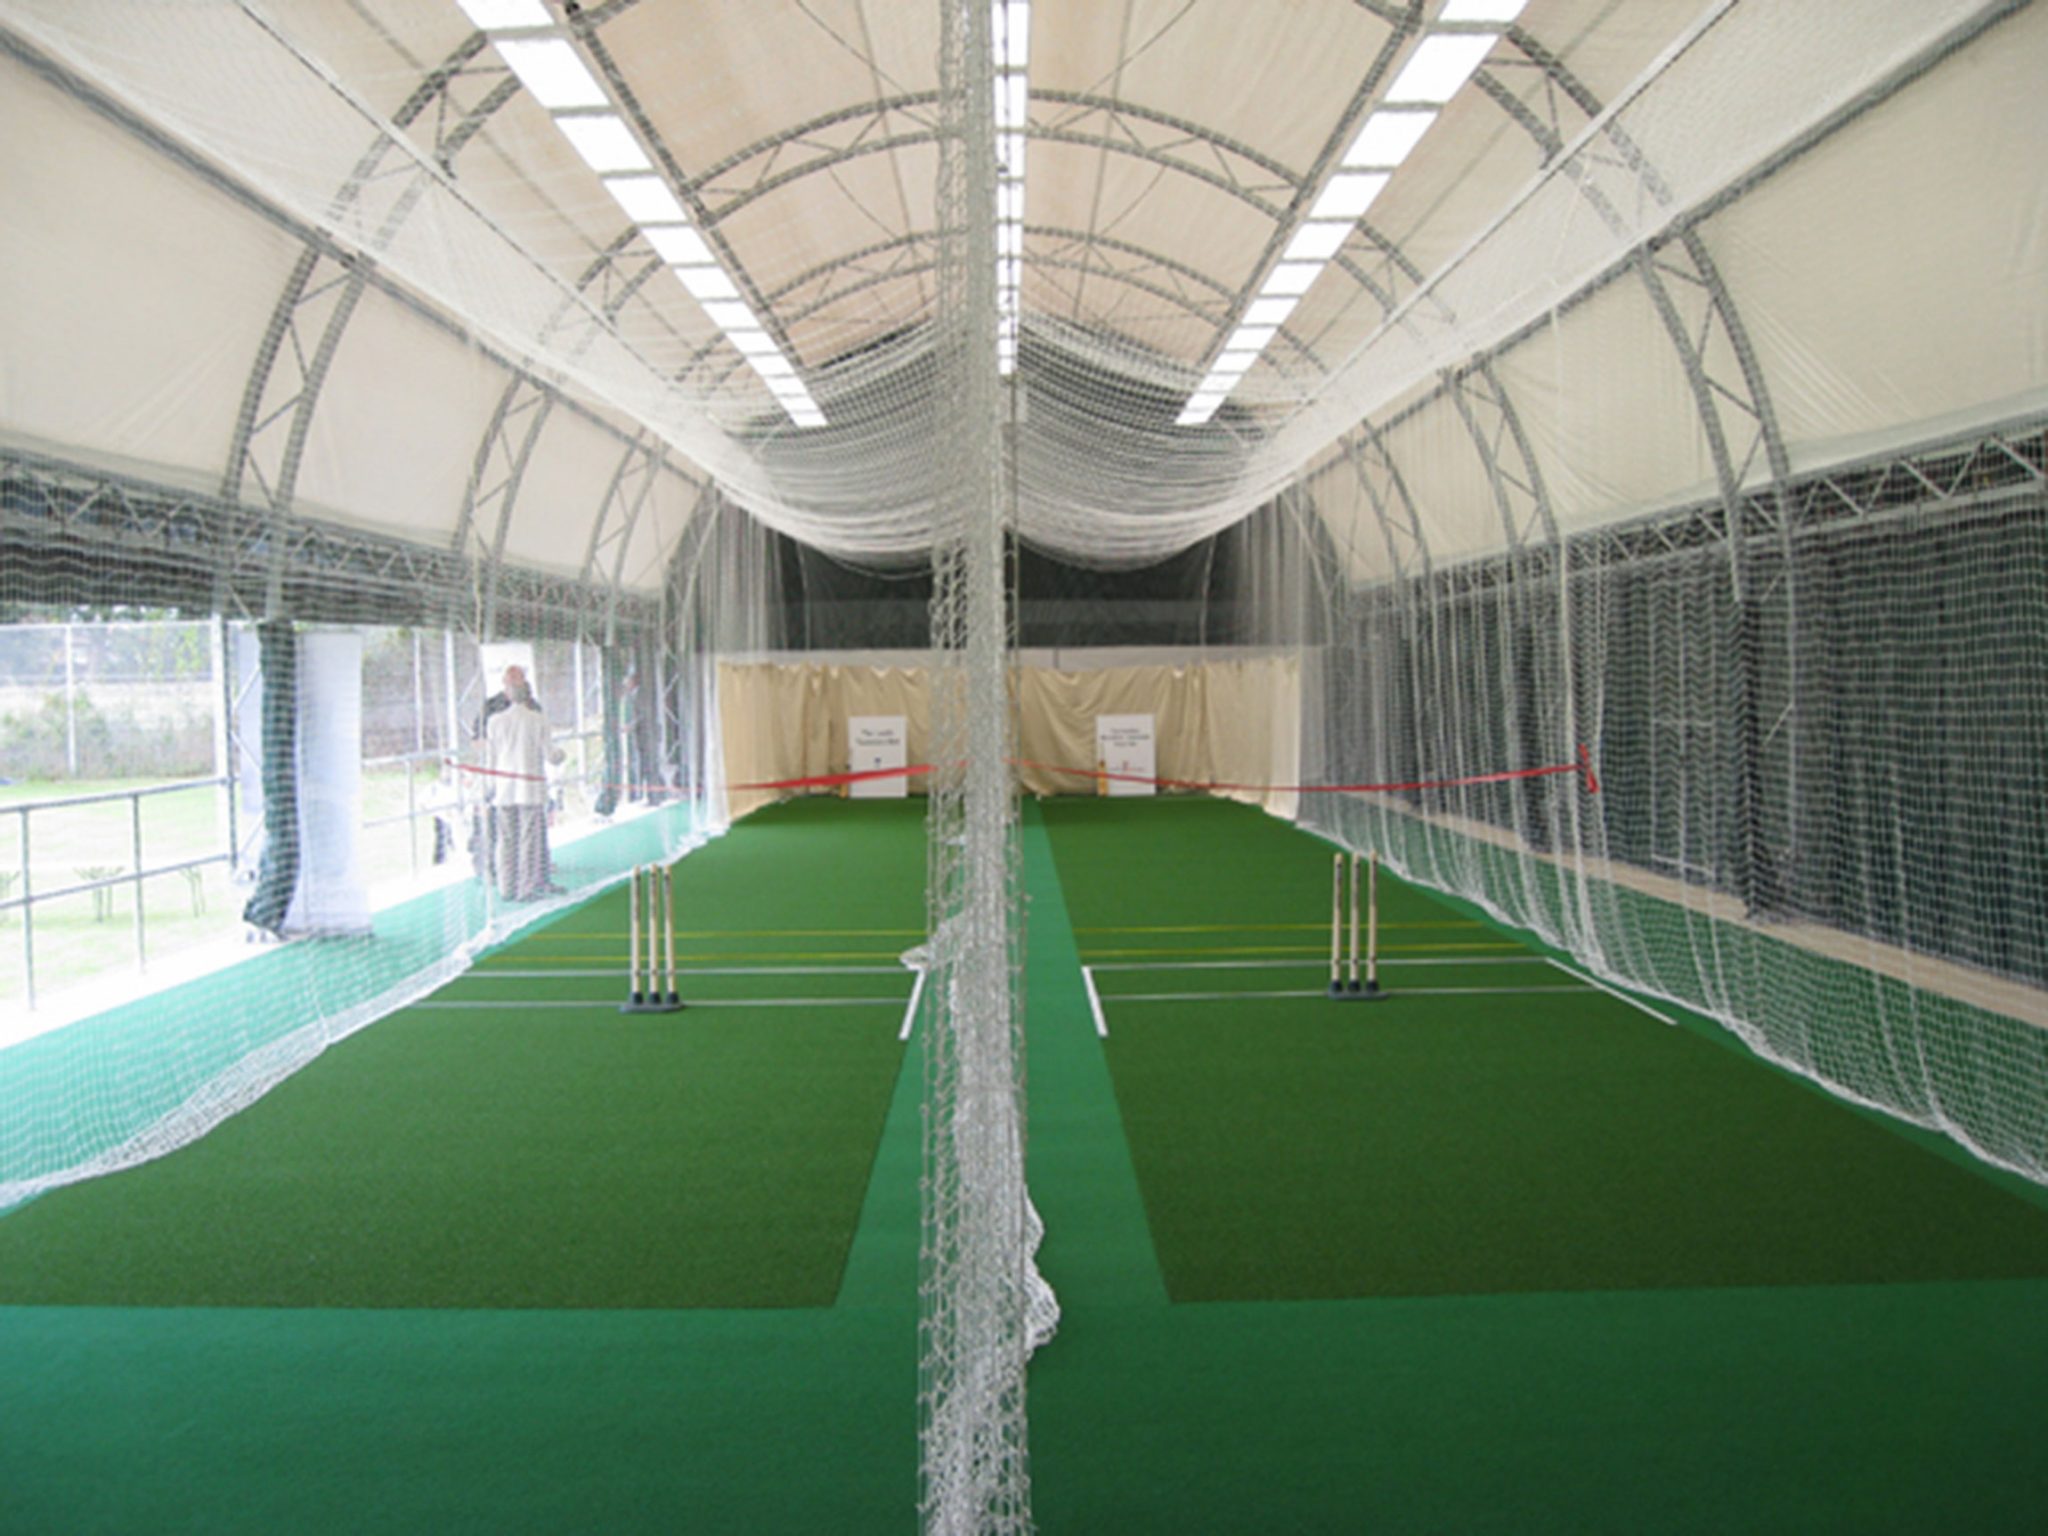 Indoor Sports Facilities Help Keep The Nation Active